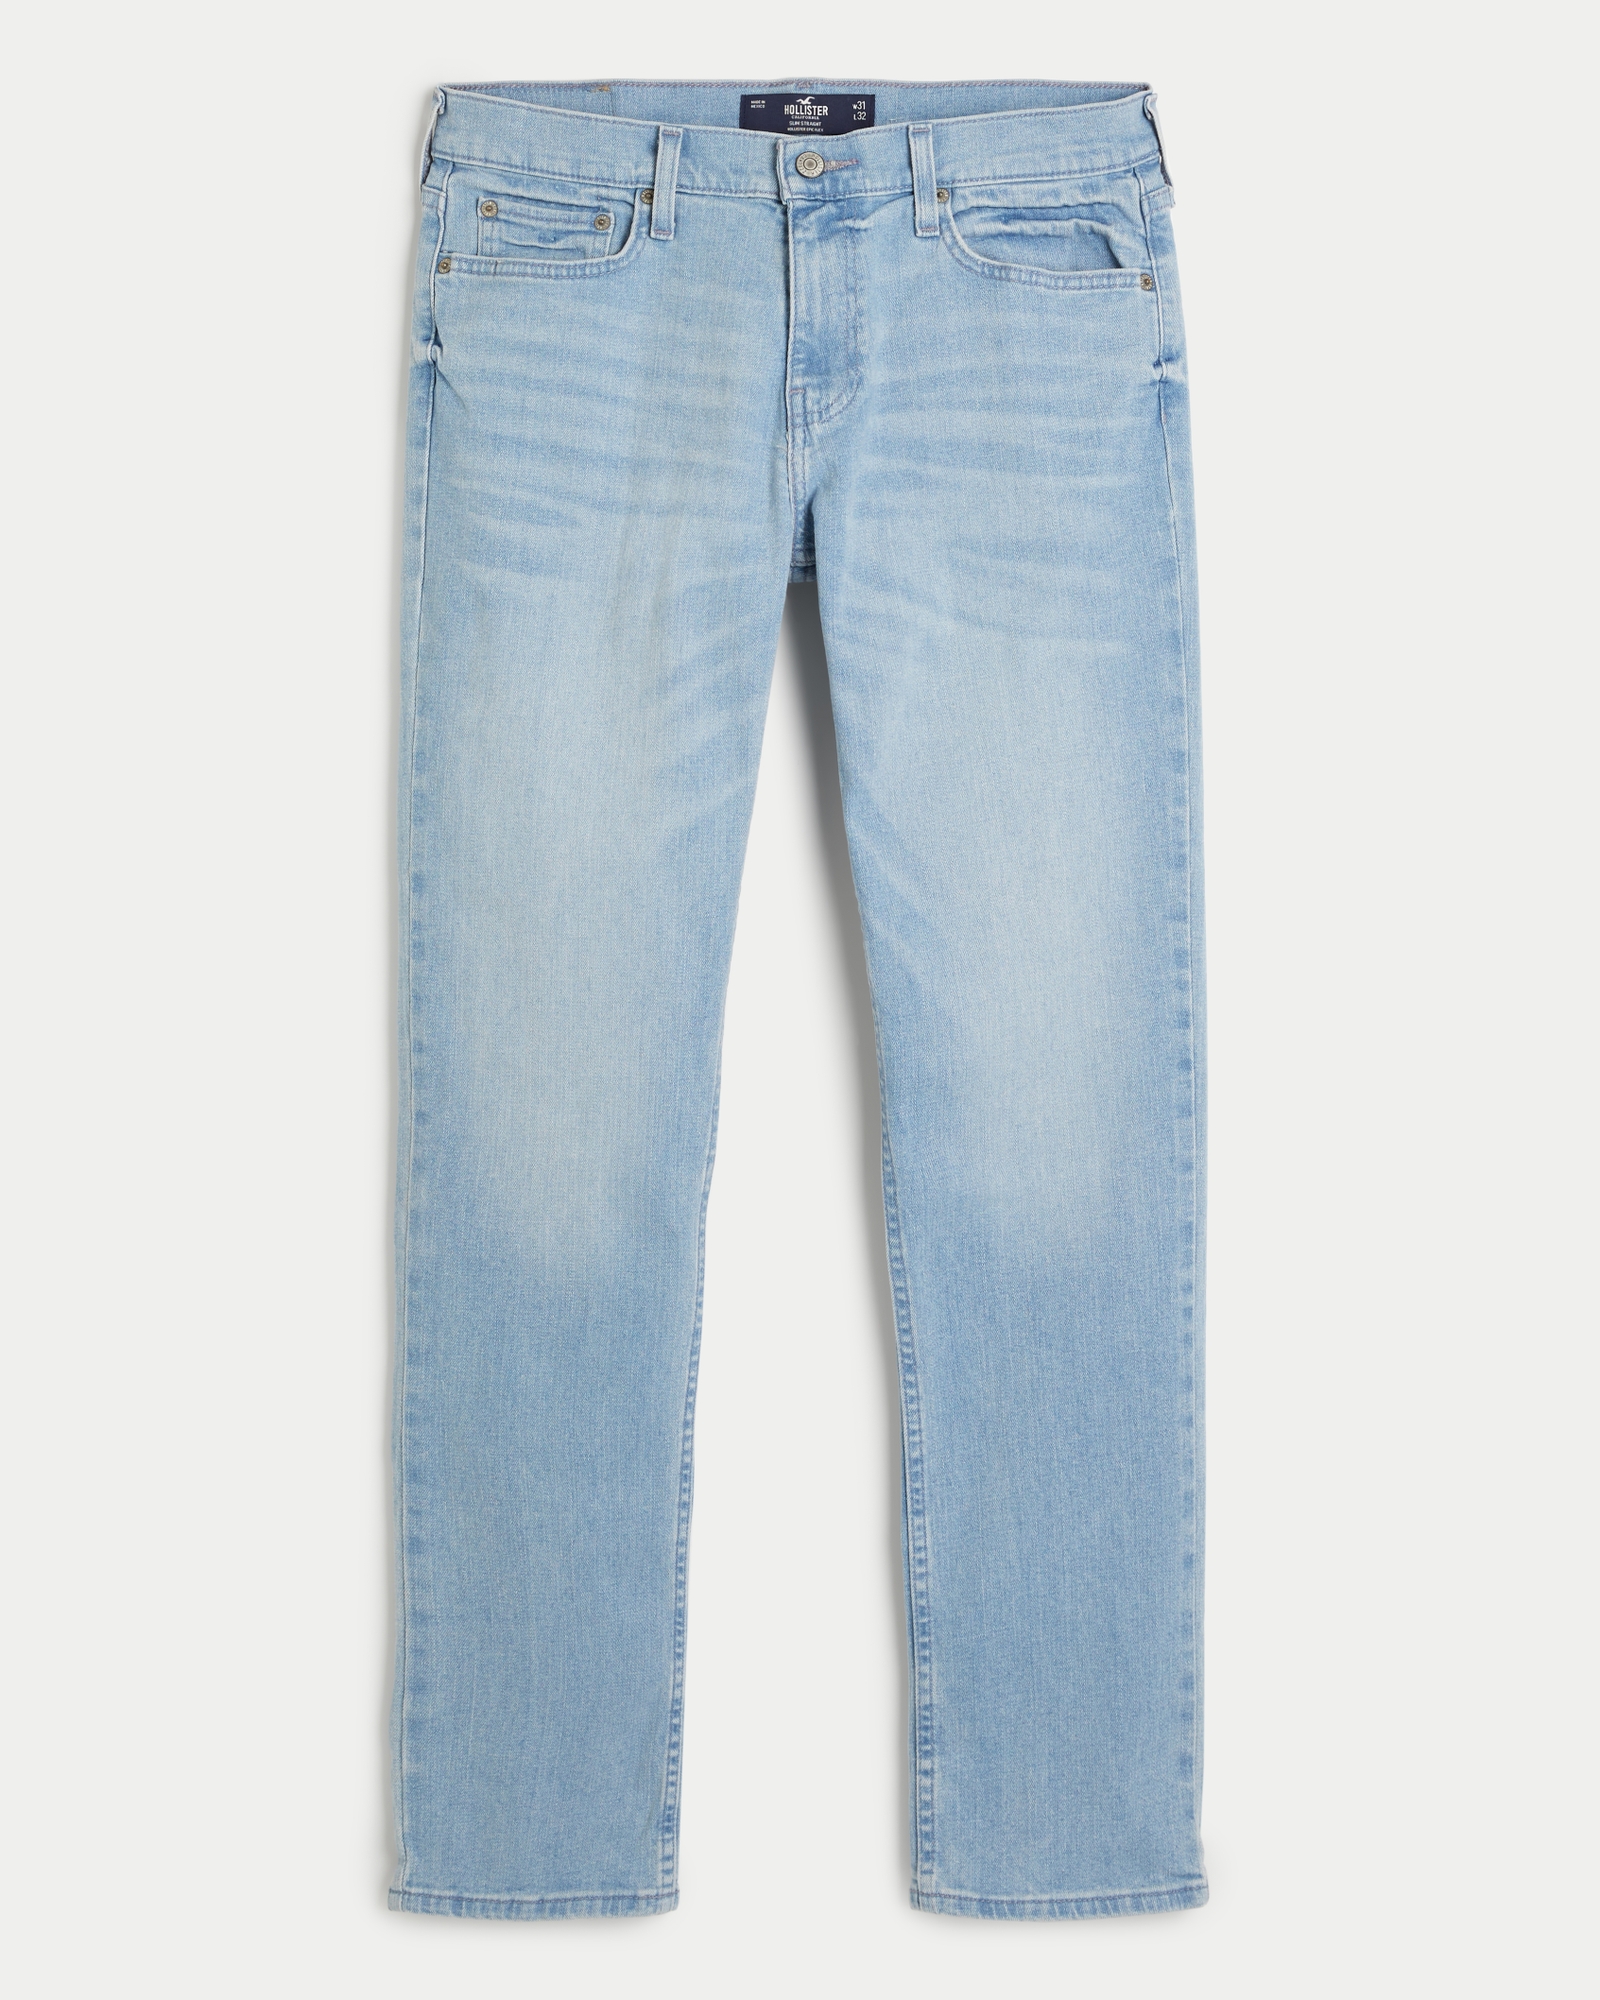 Hollister Women's Jeans Size 28x32 Low Rise Light Wash Front Pocket Nice  Jeans